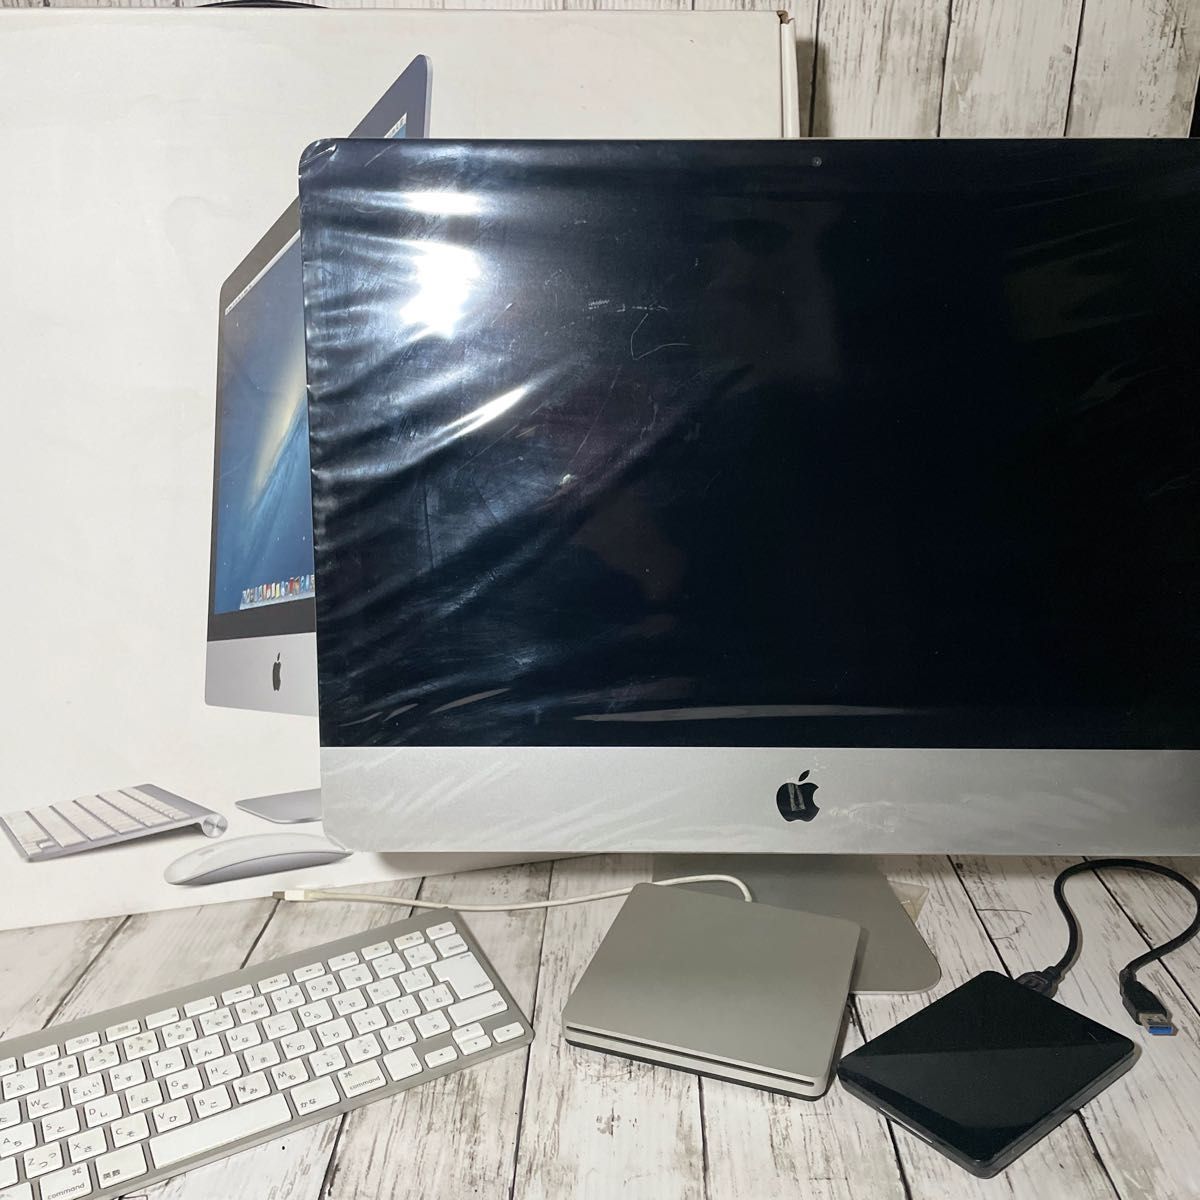 お洒落 【早い者勝ち】【即日発送可能】【極上美品】Apple A1311 iMac